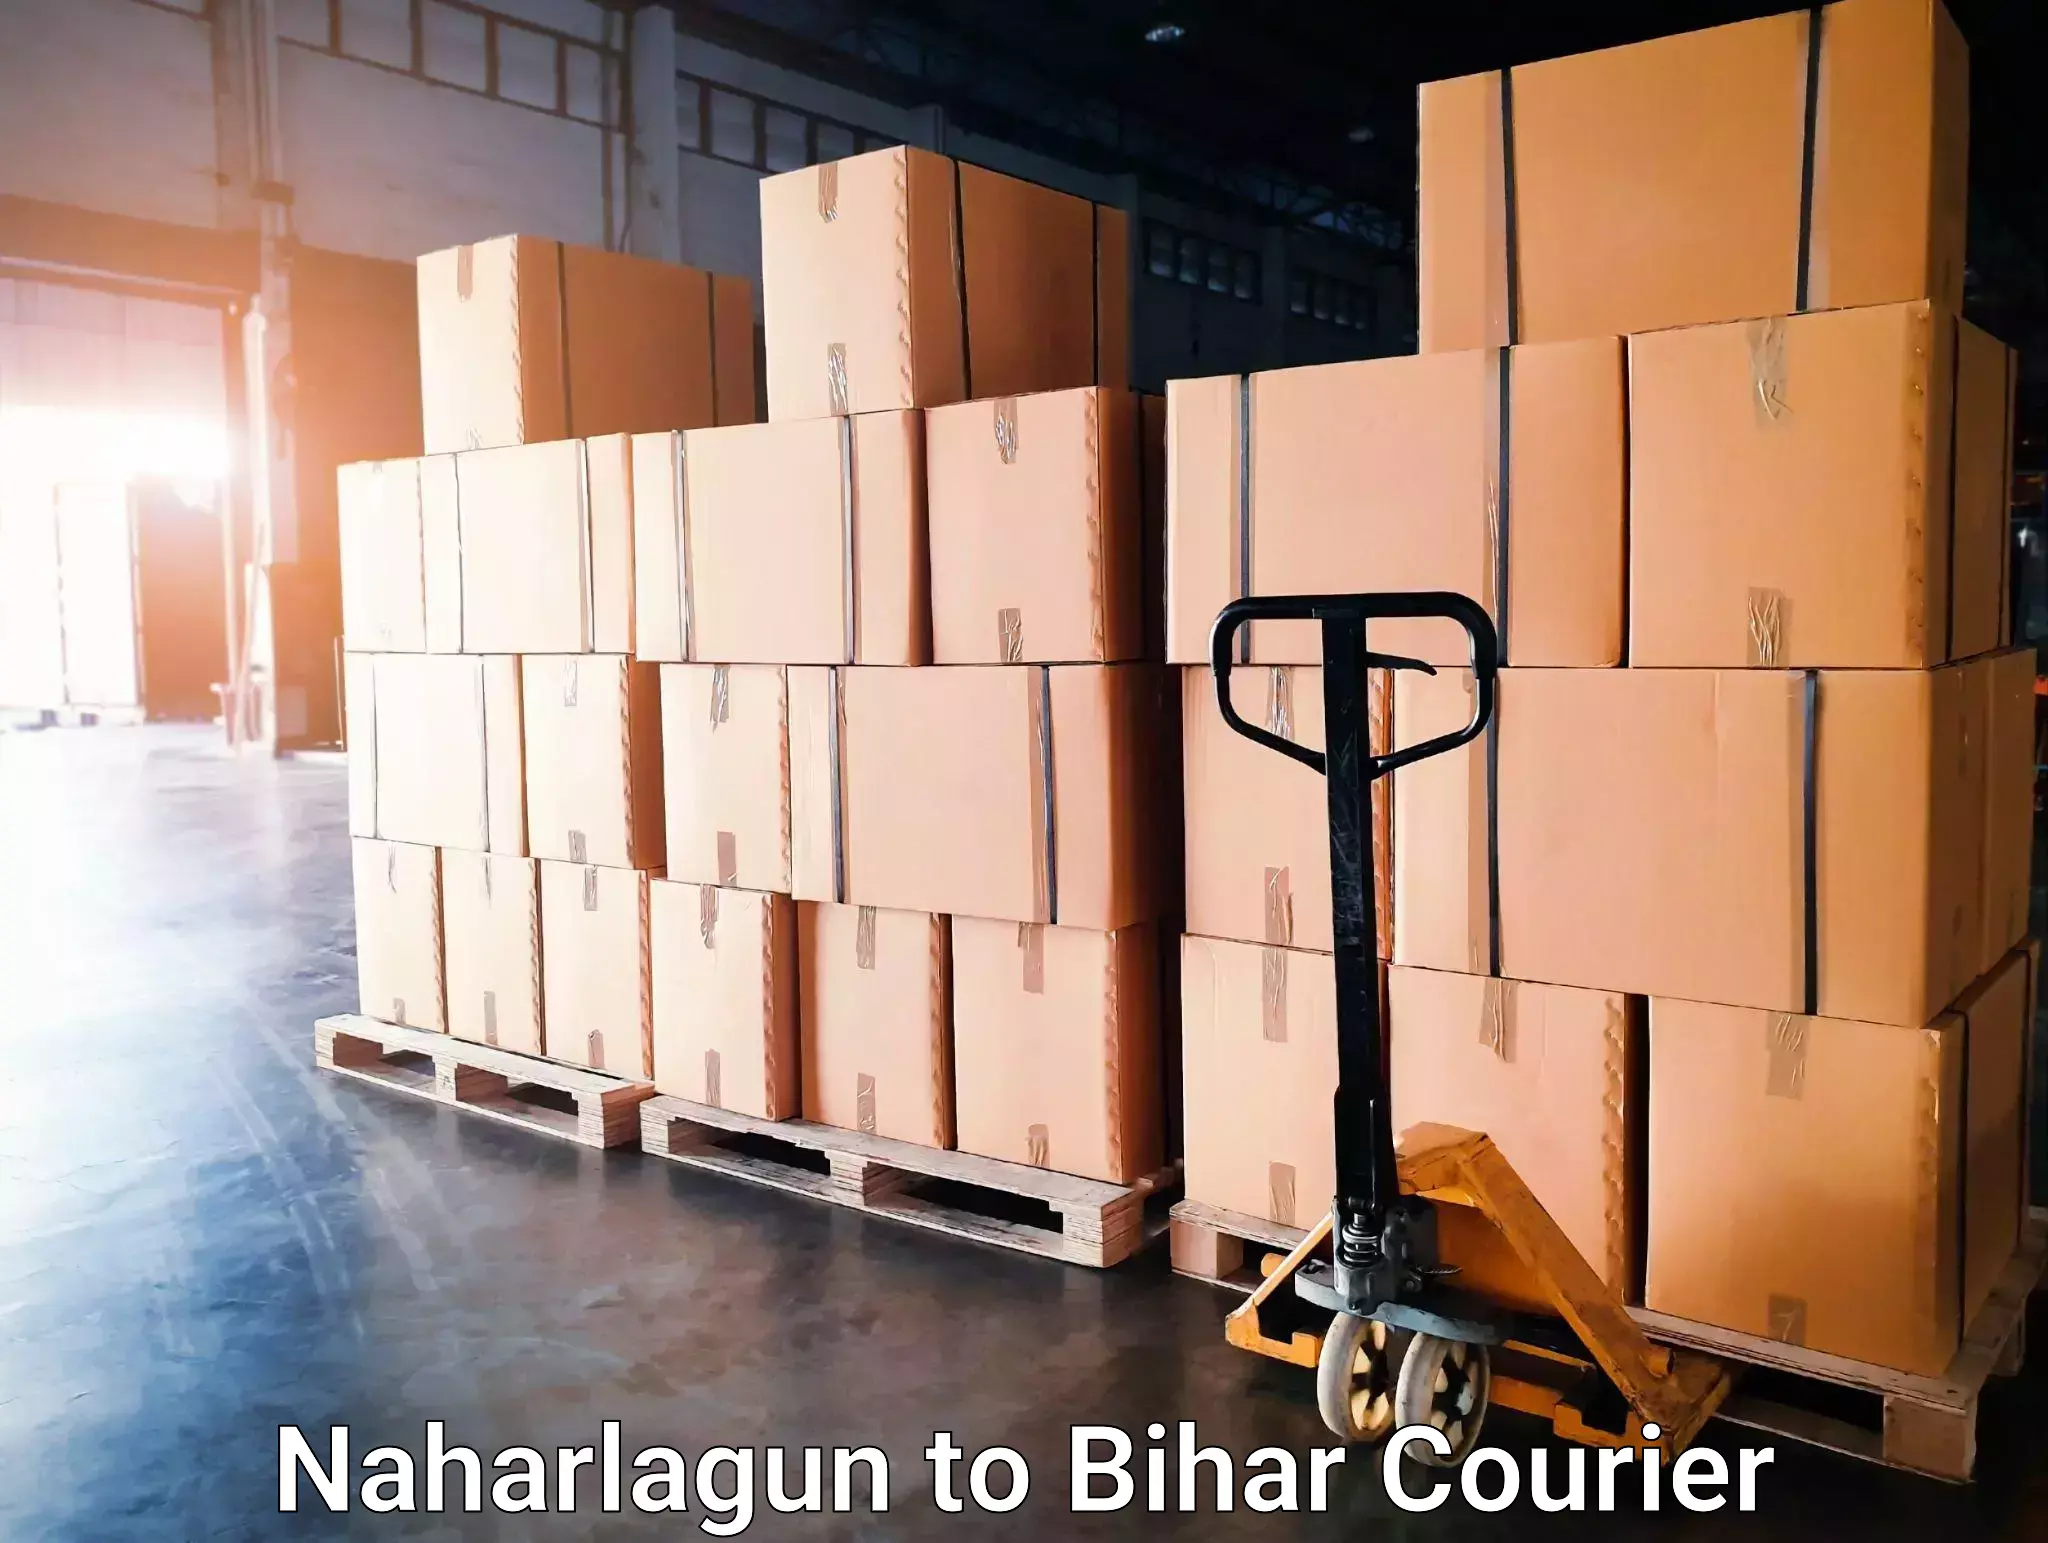 Courier service innovation in Naharlagun to Bihar